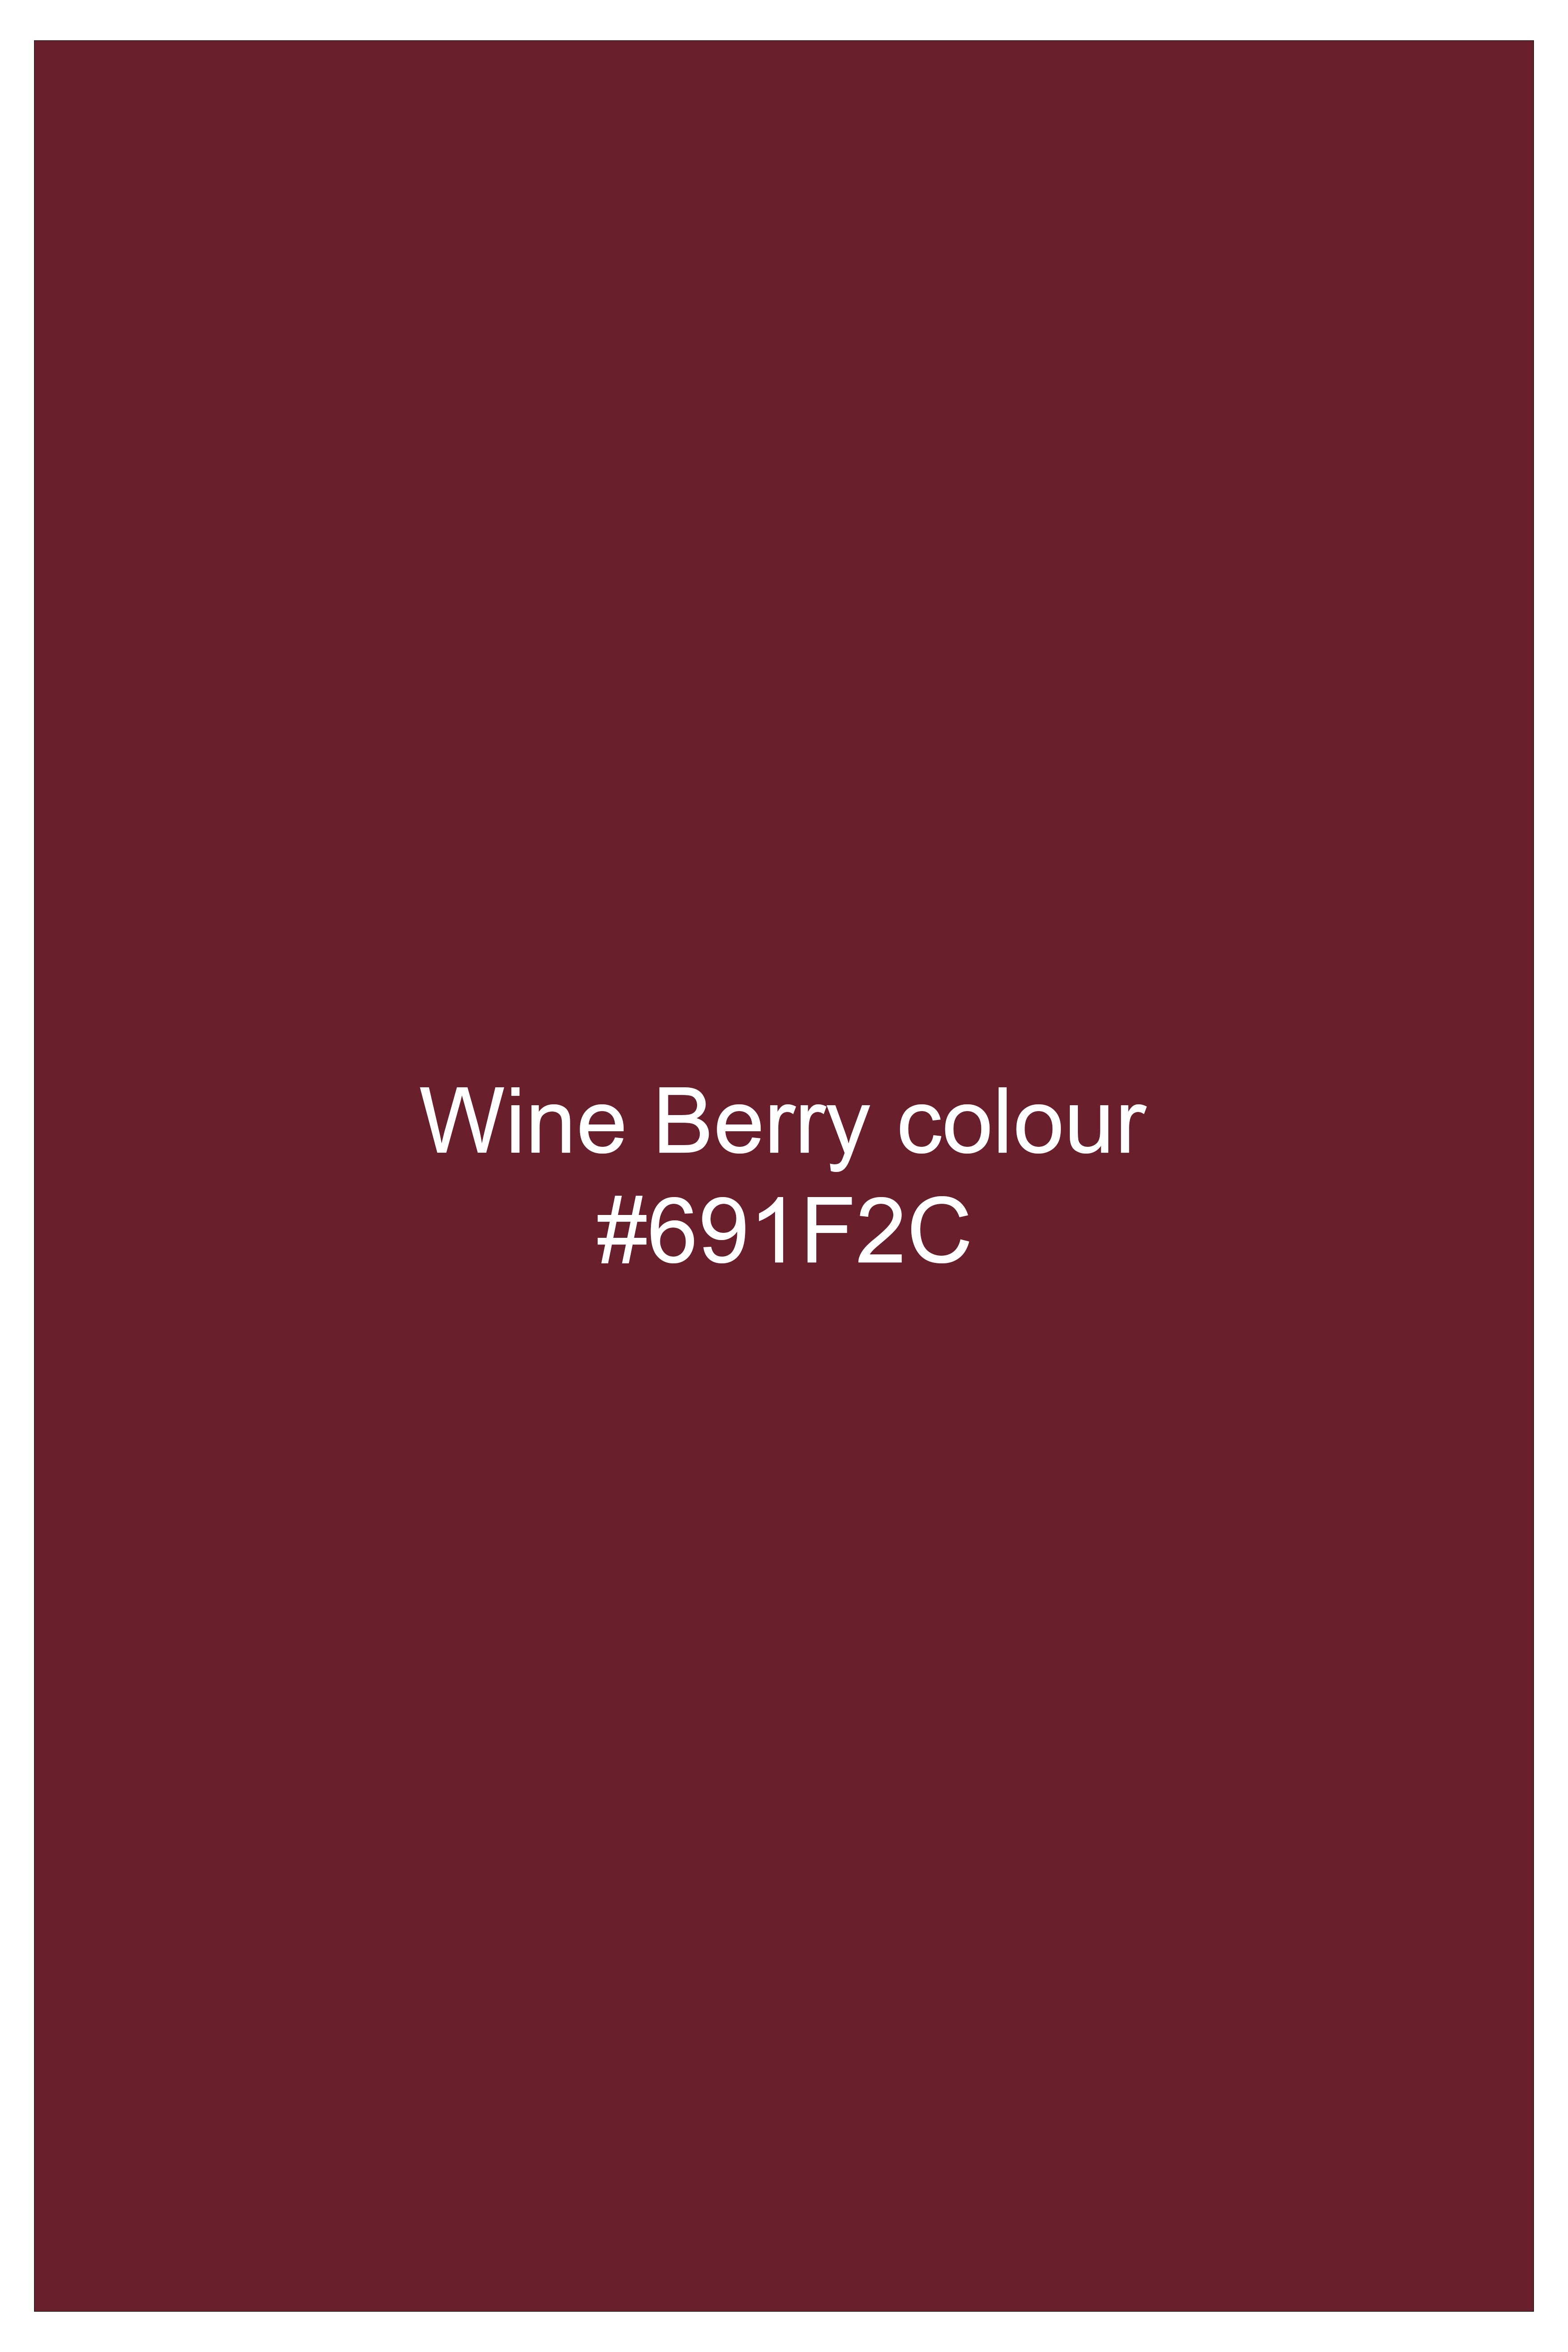 Wine Berry Textured Luxurious Linen Shorts